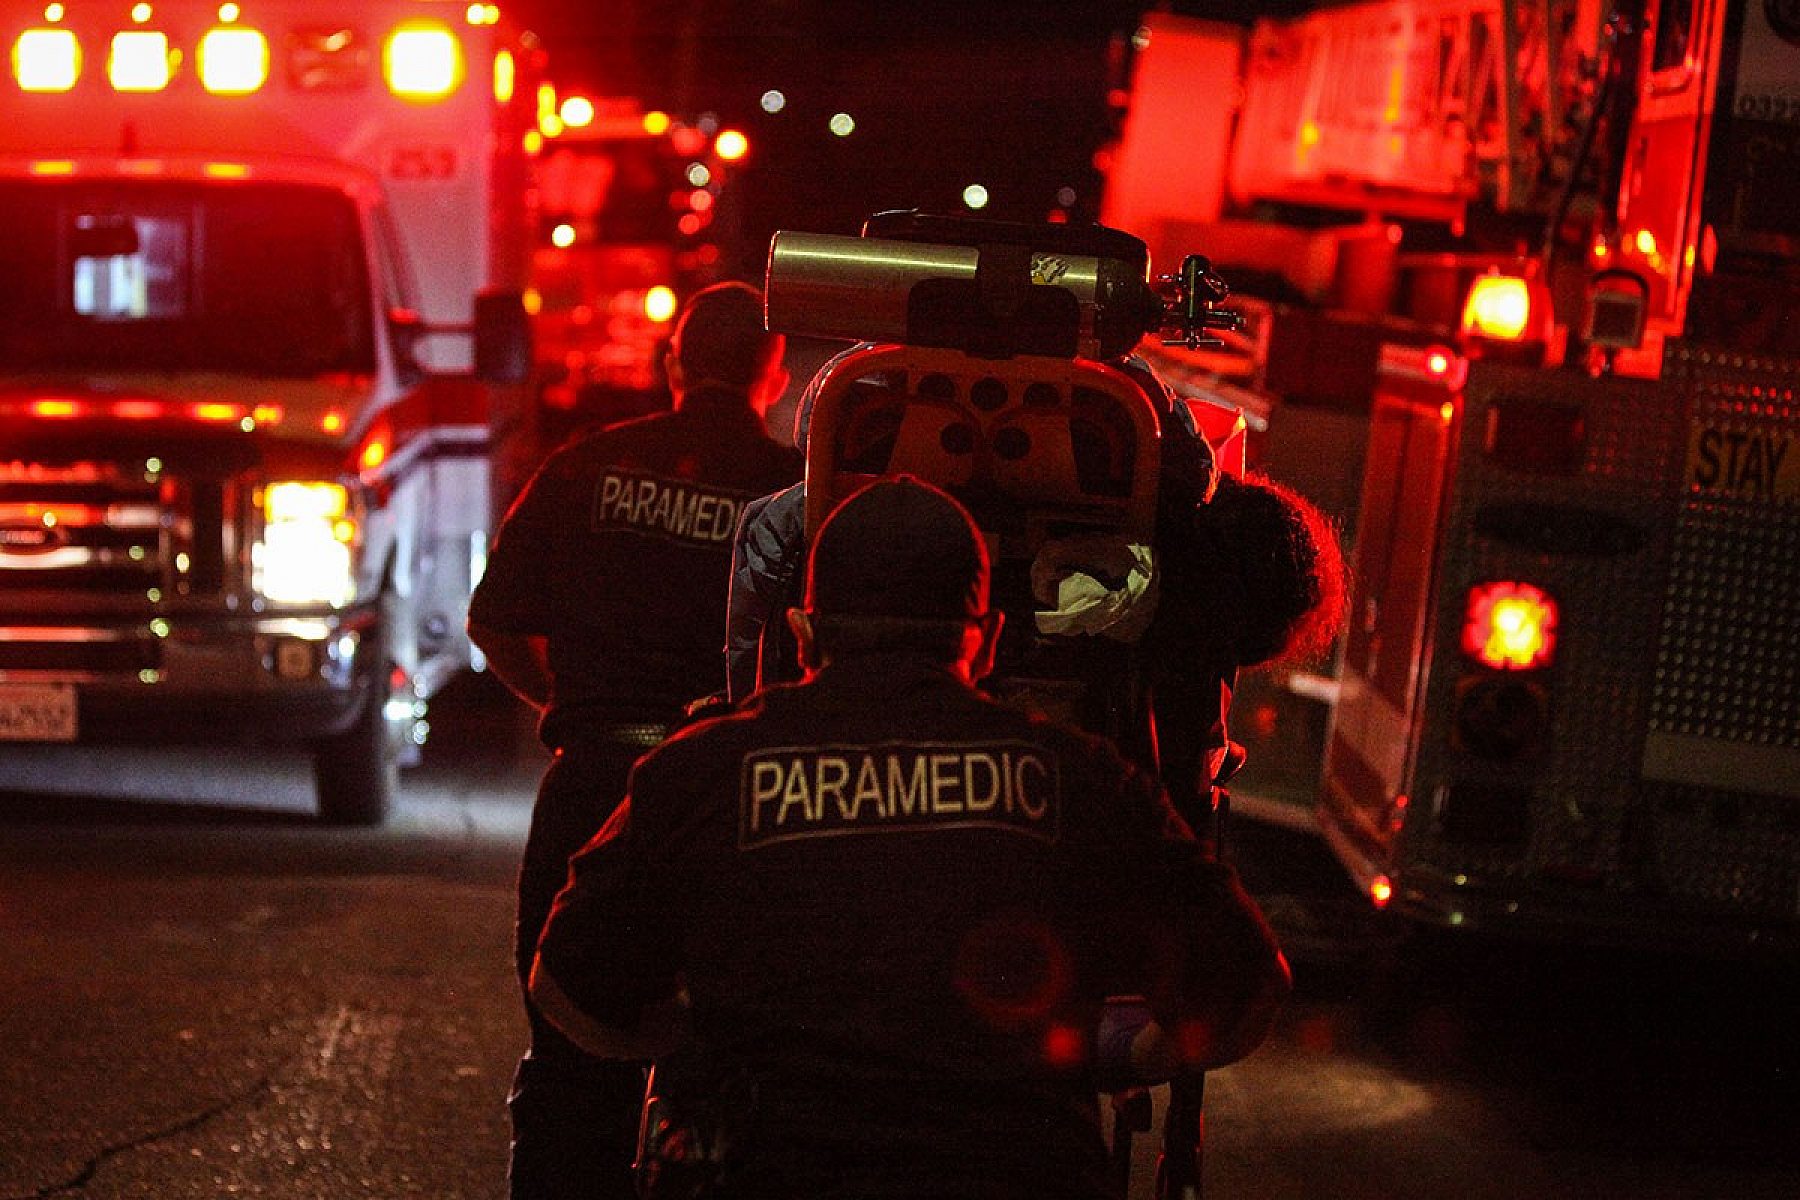 Paramedic photo